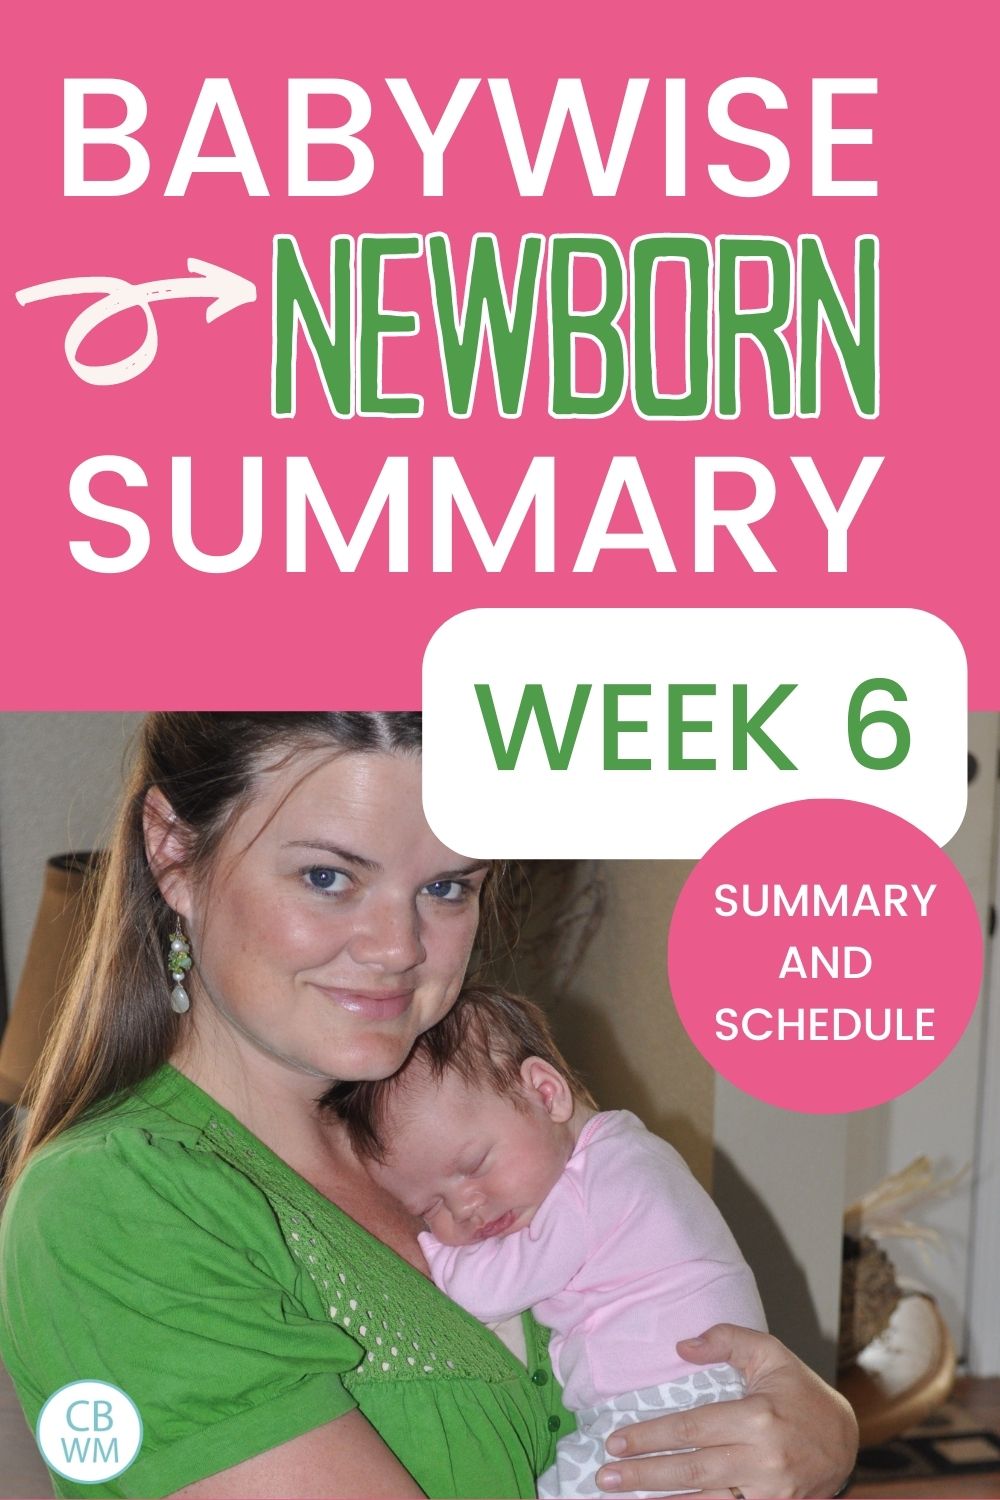 Newborn summary week 6 pinnable image